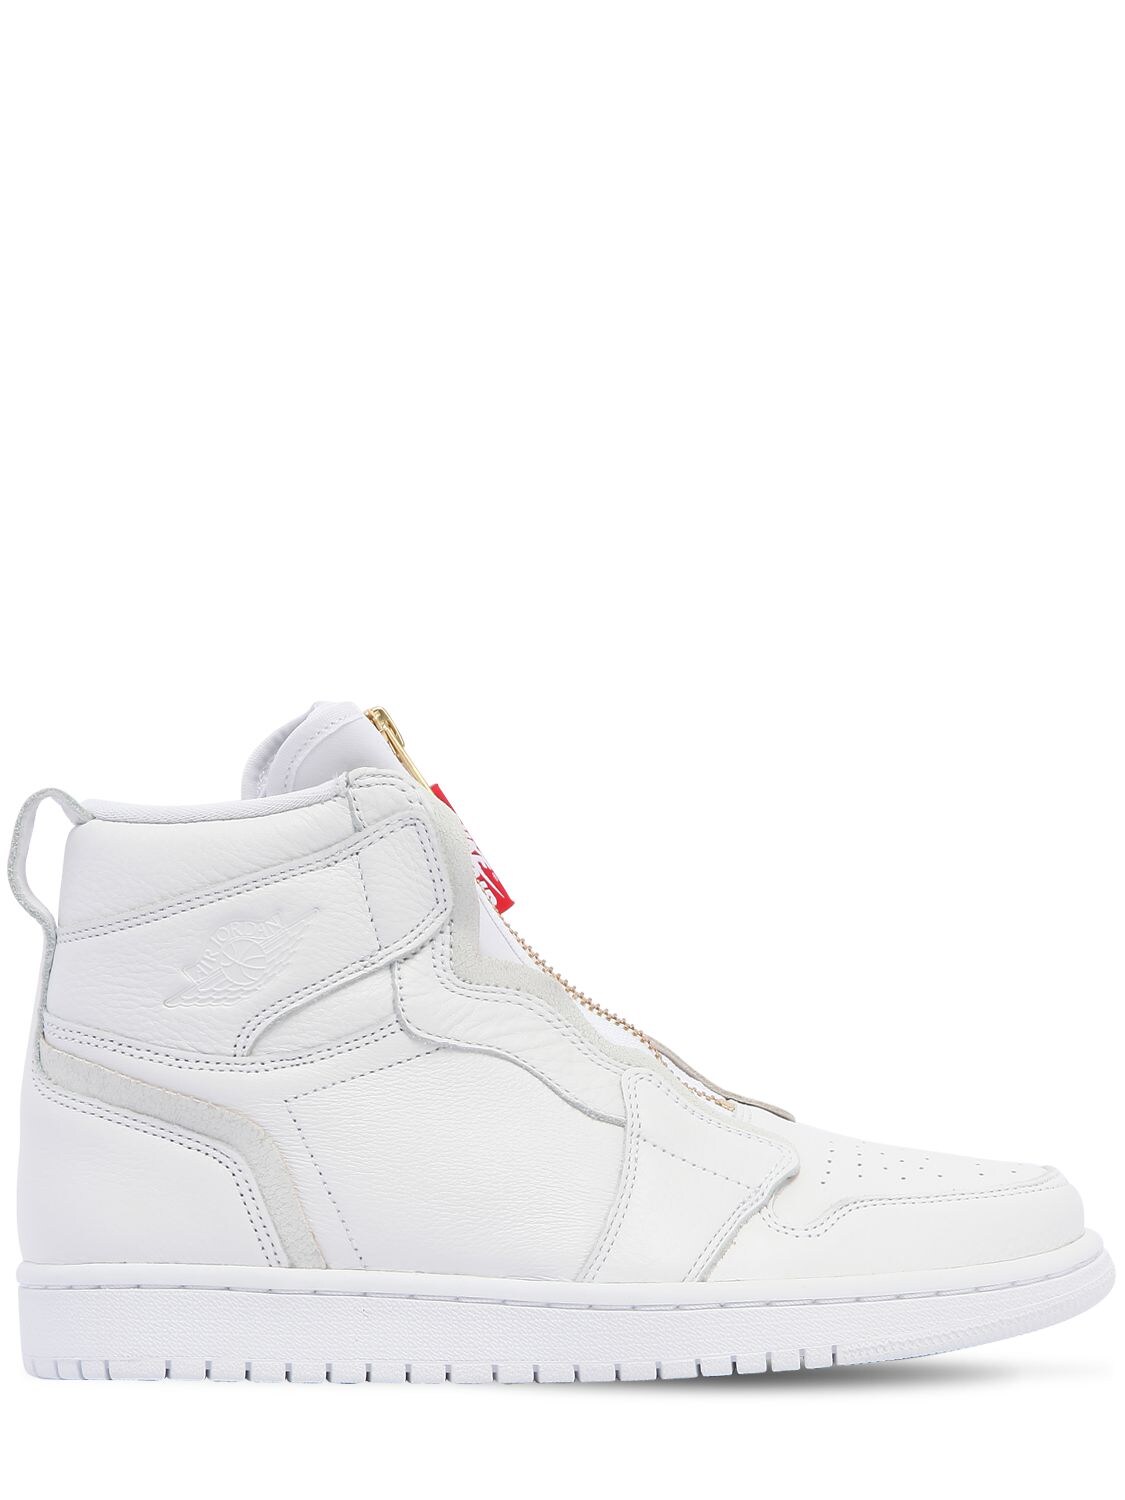 Nike Air Jordan 1 High Zip Sneakers In White